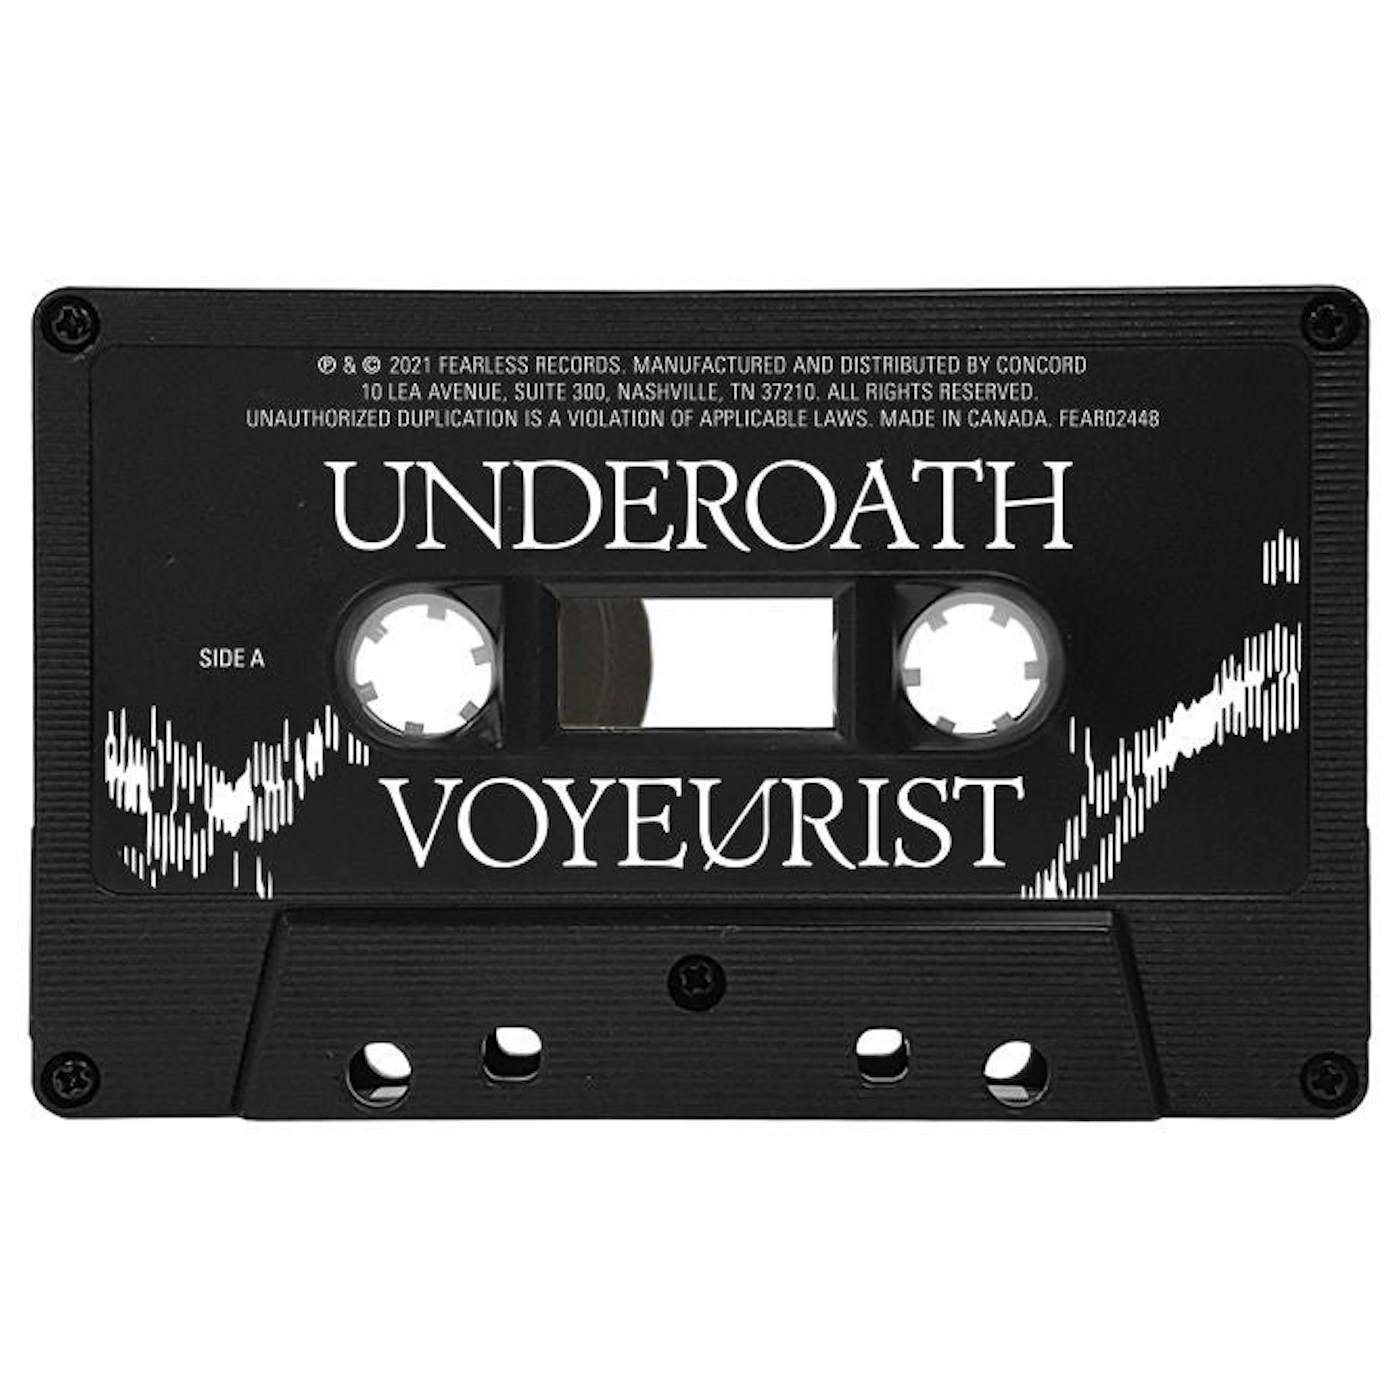 Underoath "Voyeurist" Black Sonic Cassette